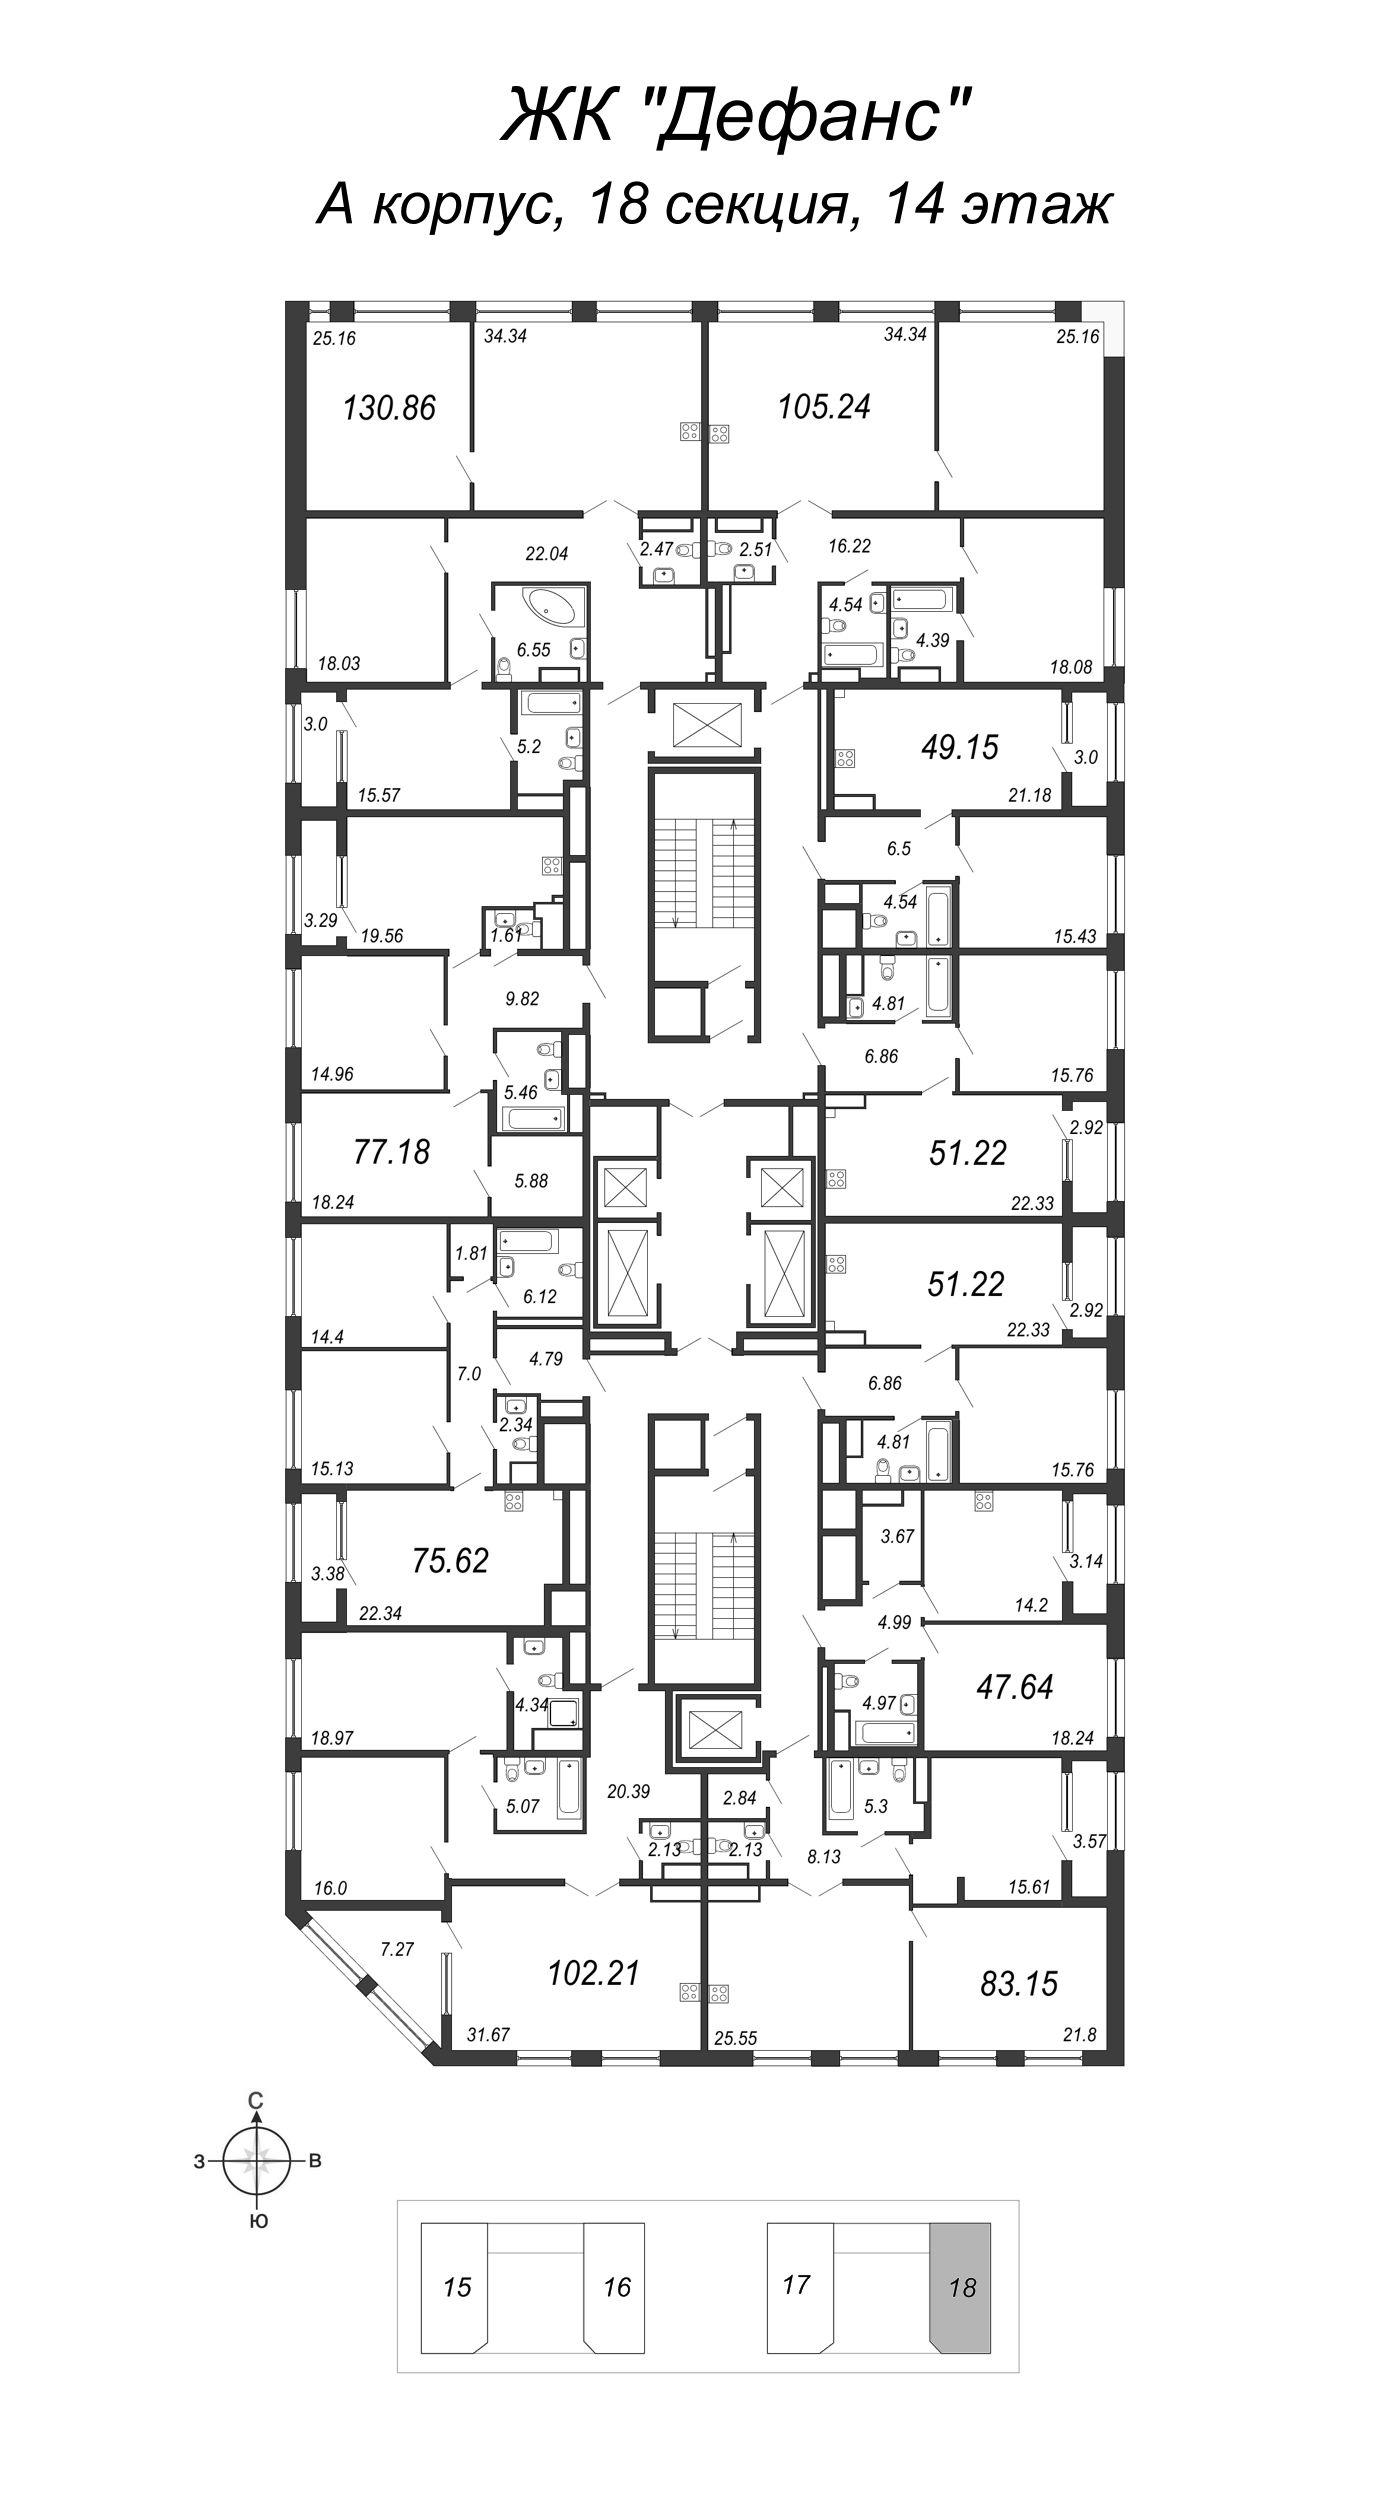 3-комнатная (Евро) квартира, 75.62 м² - планировка этажа